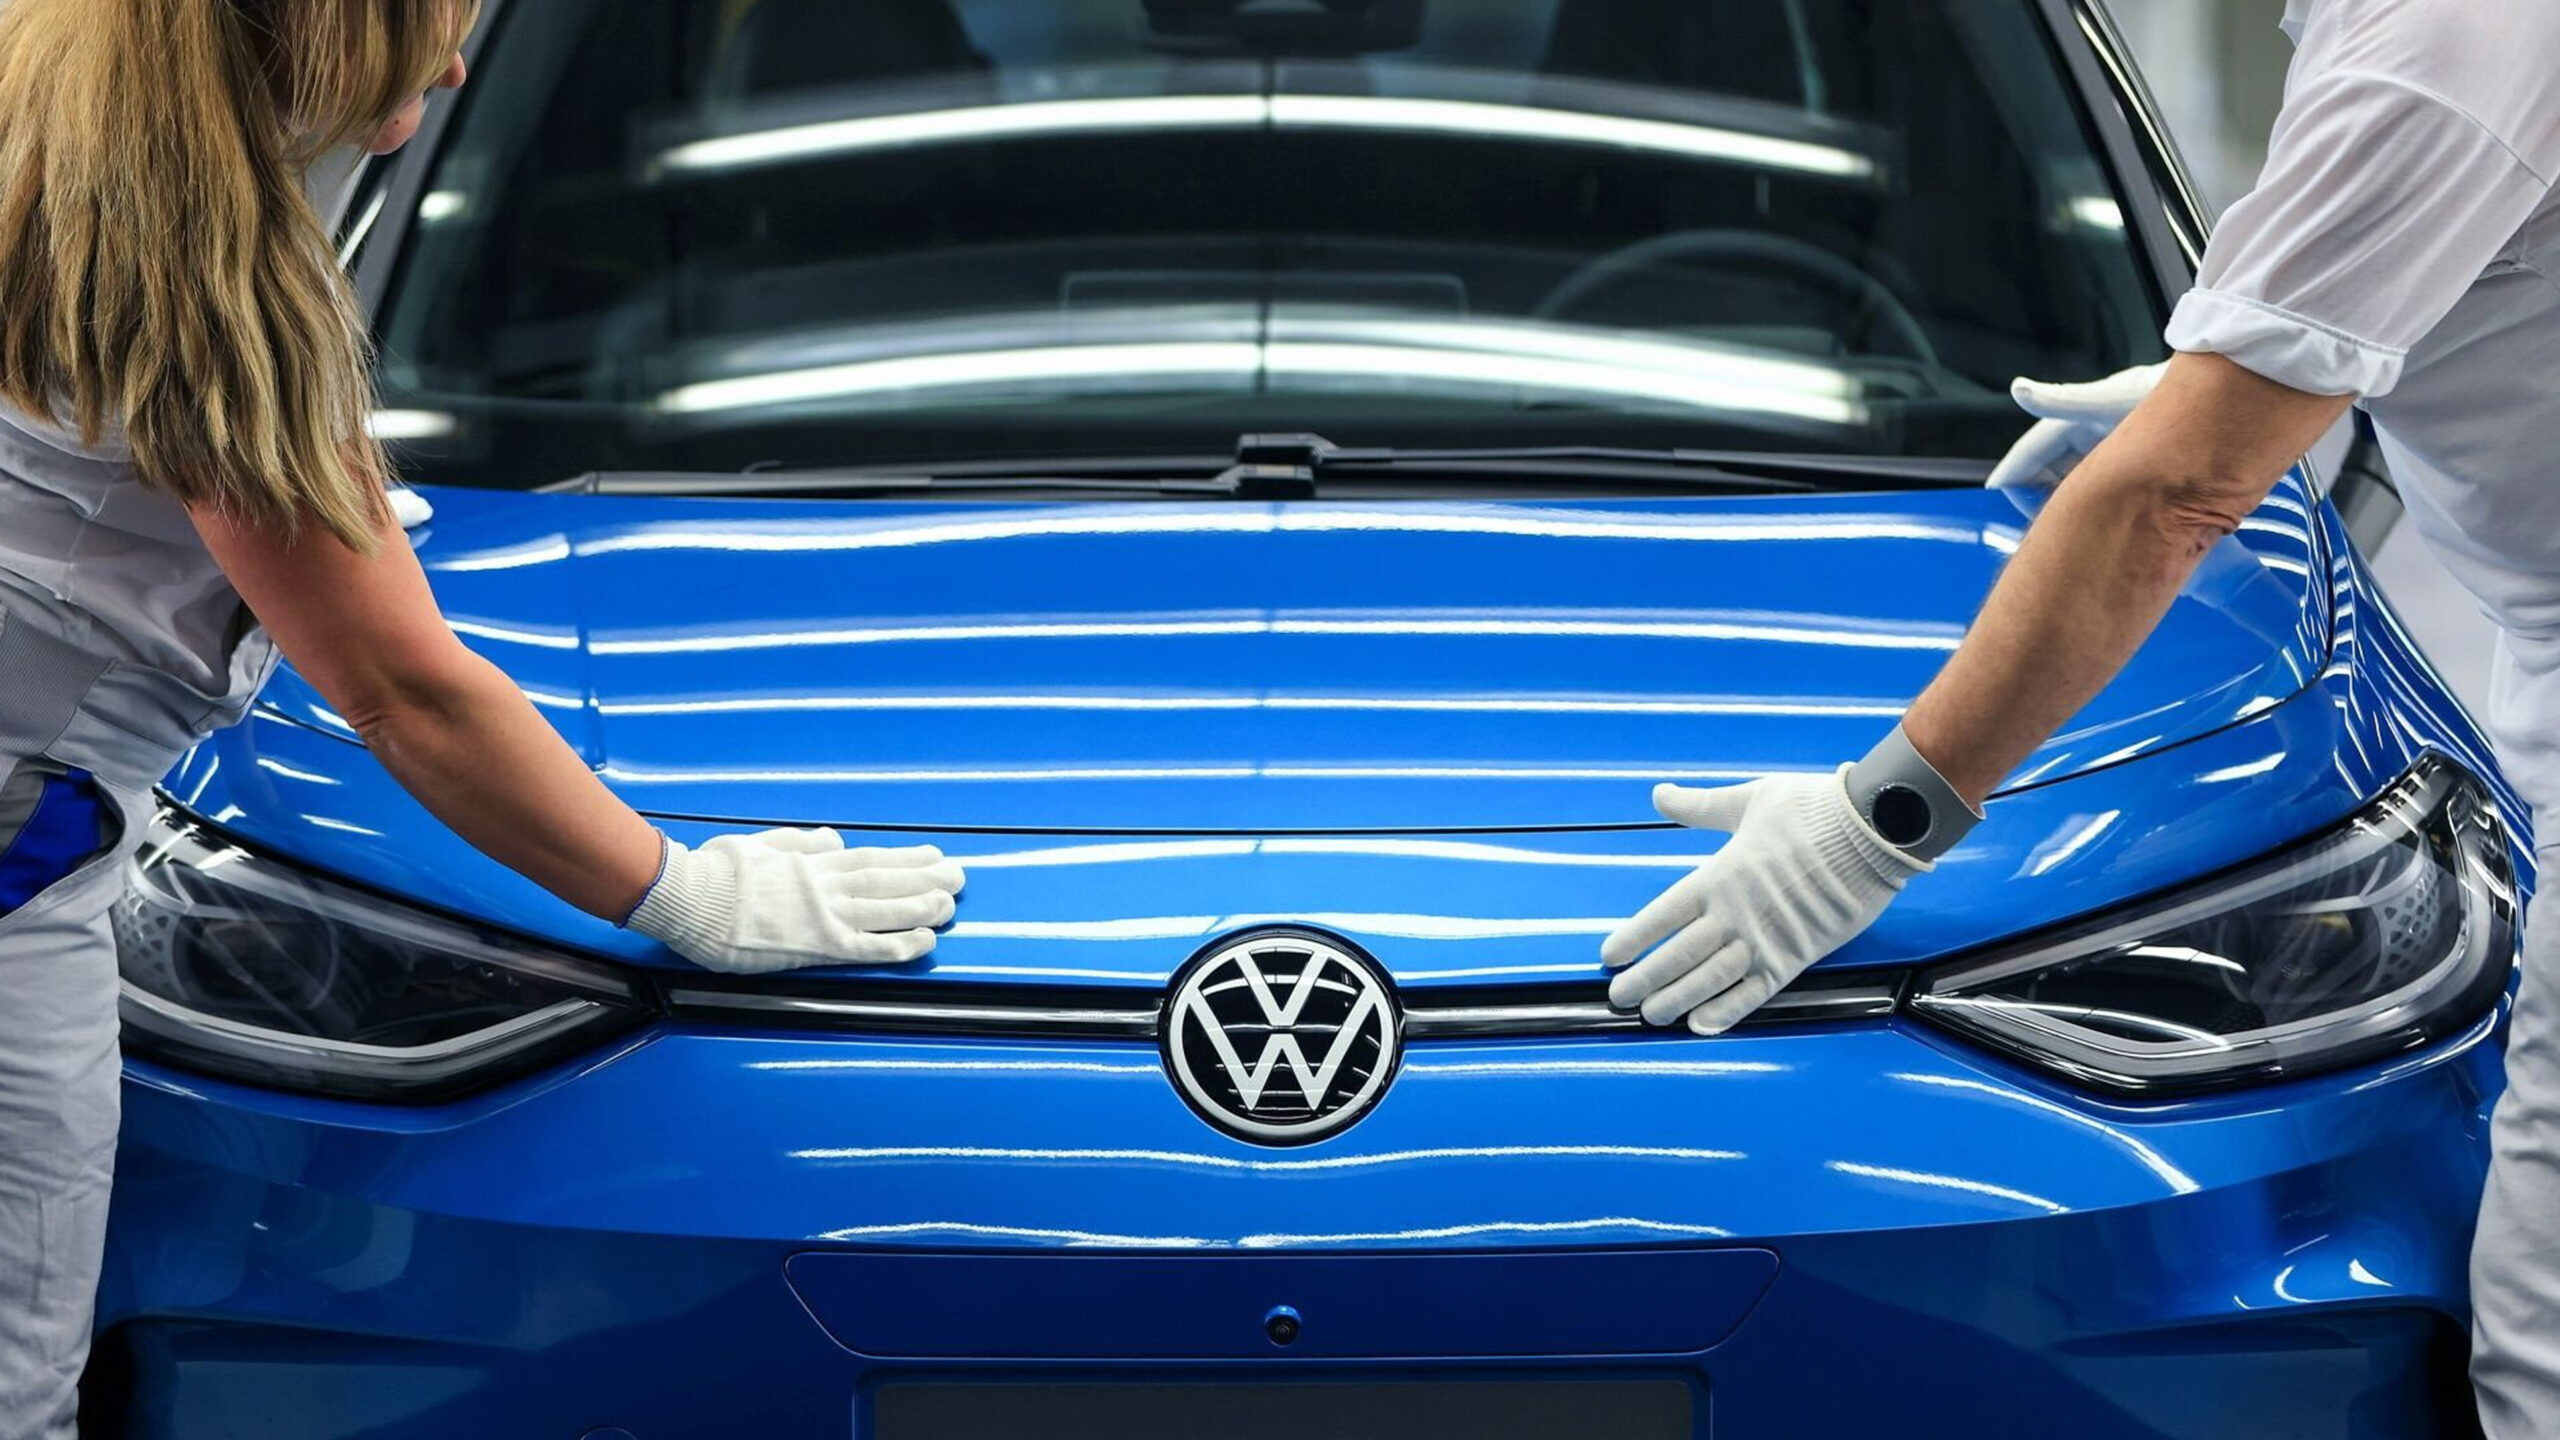 Employees make final checks on Volkswagen car